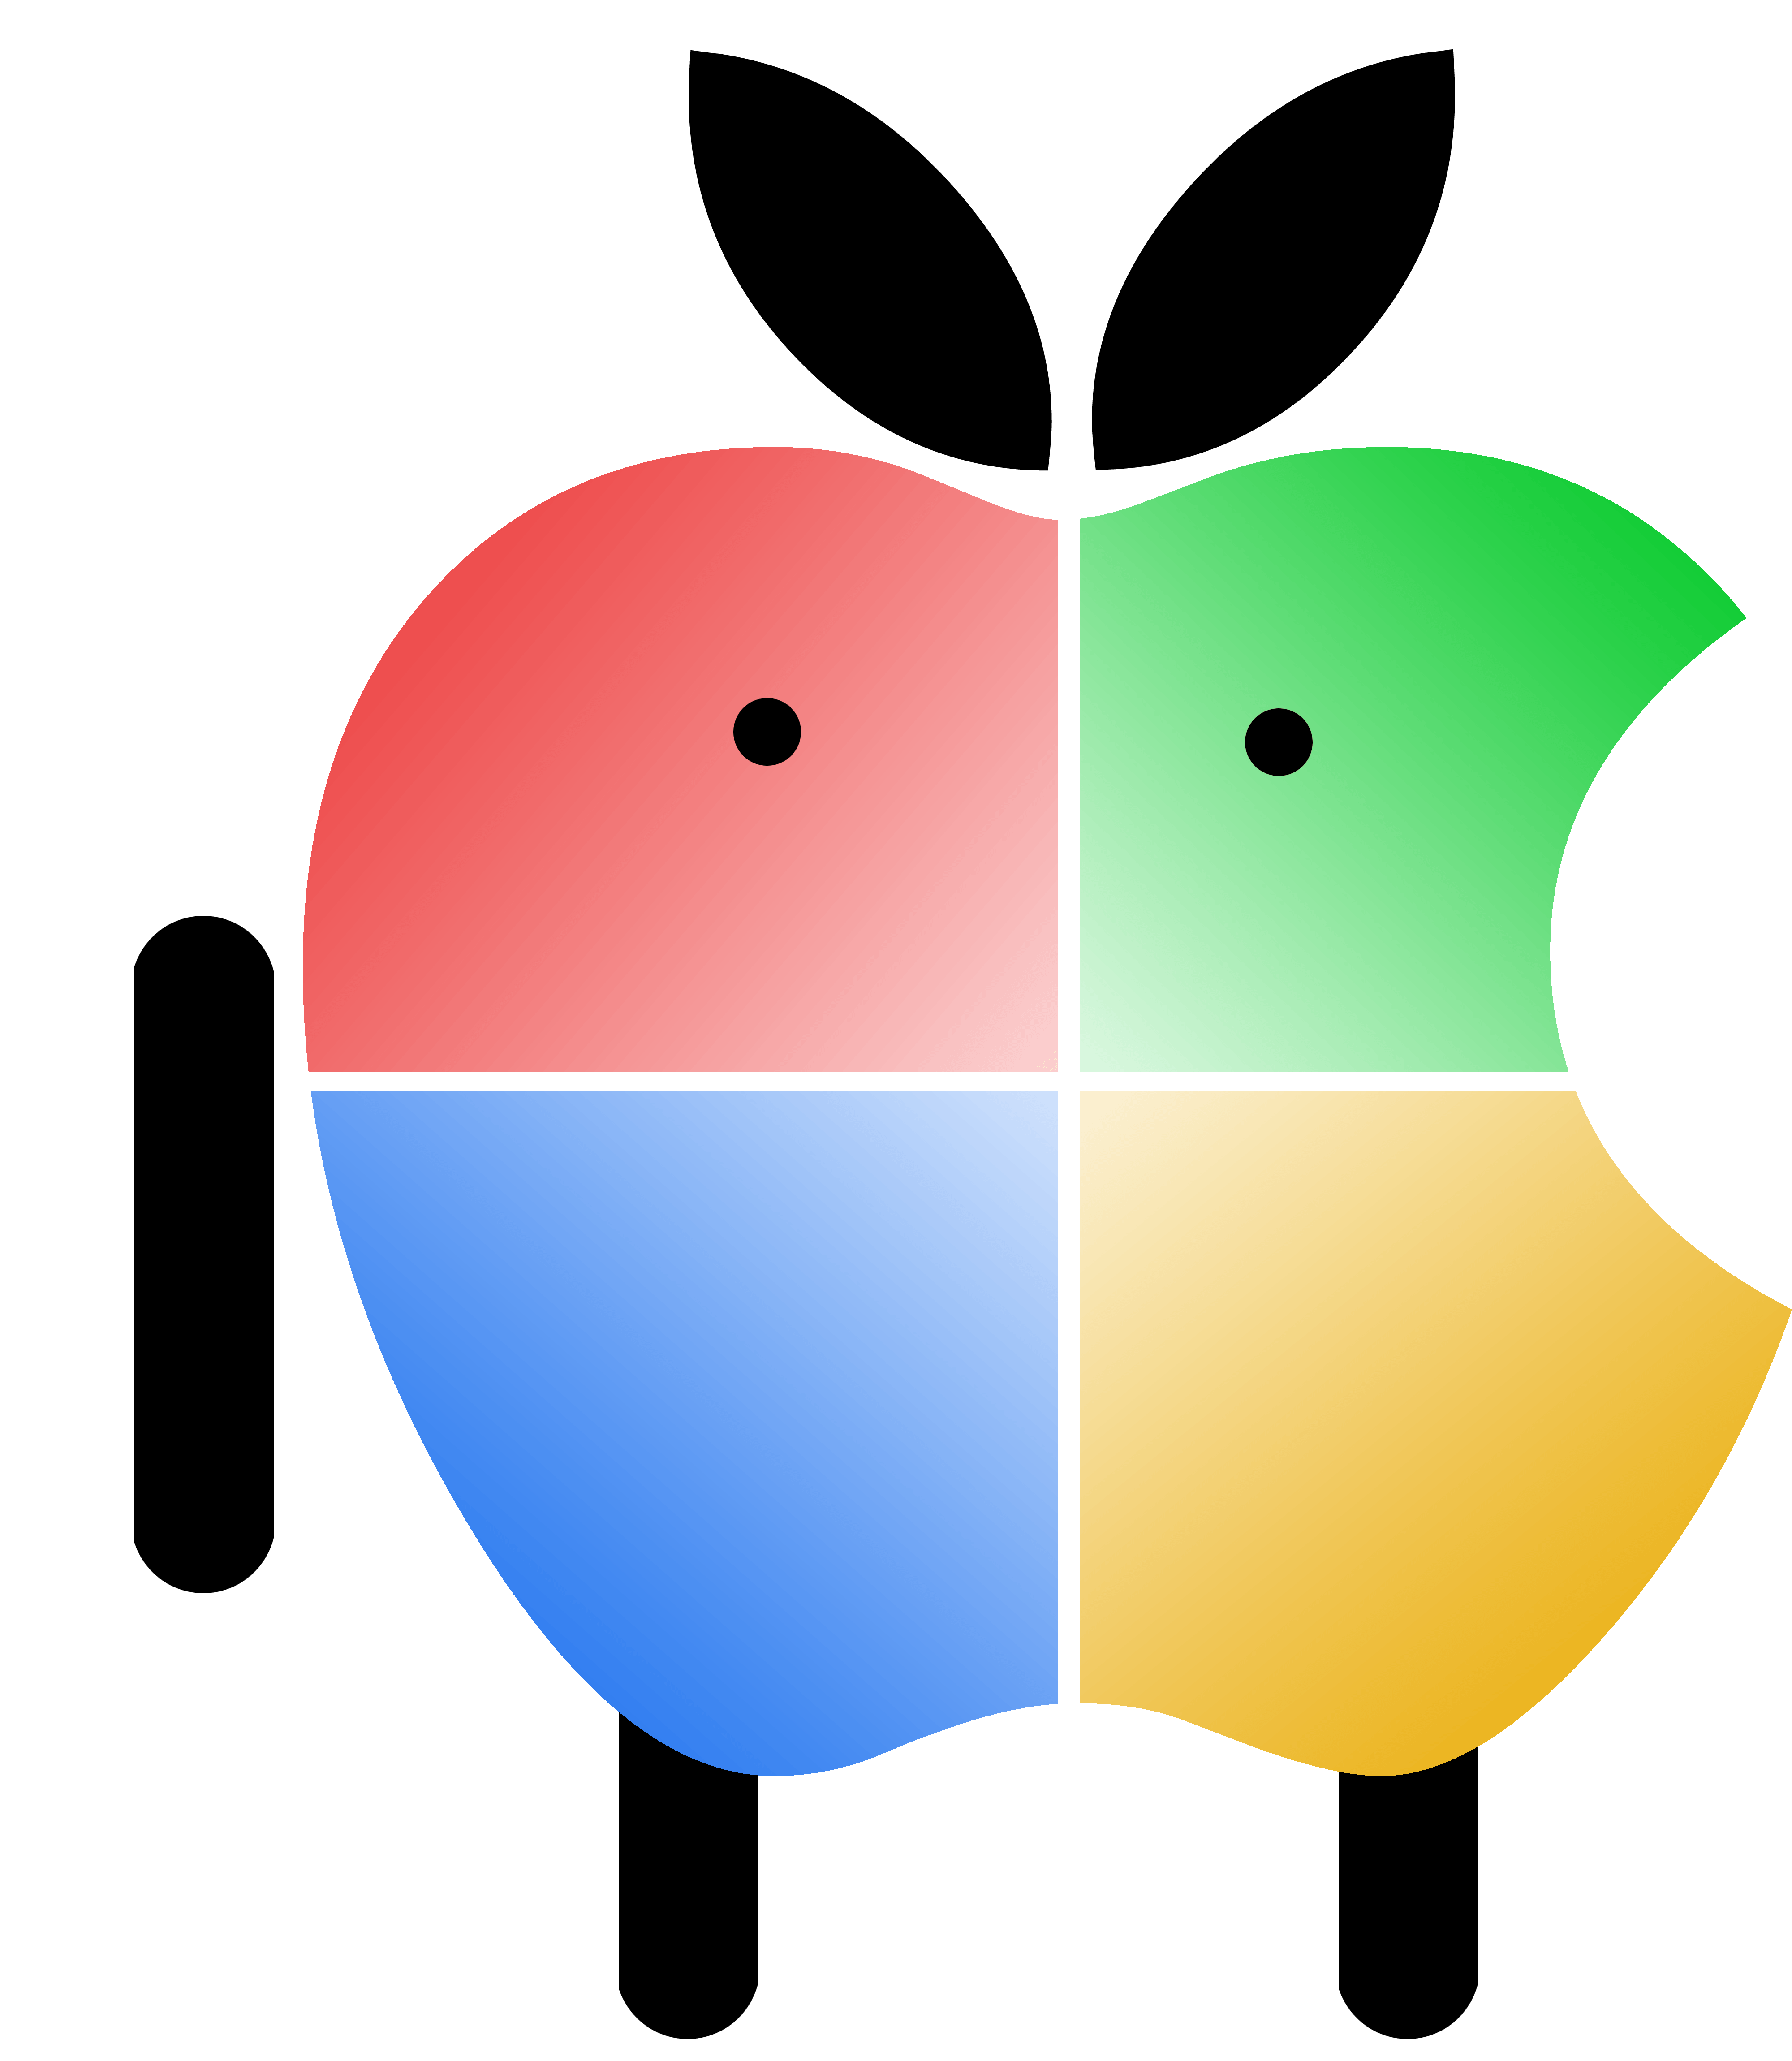 Windows Logo - Apple Android Windows logo (Meaningless Drivel forum at Coderanch)